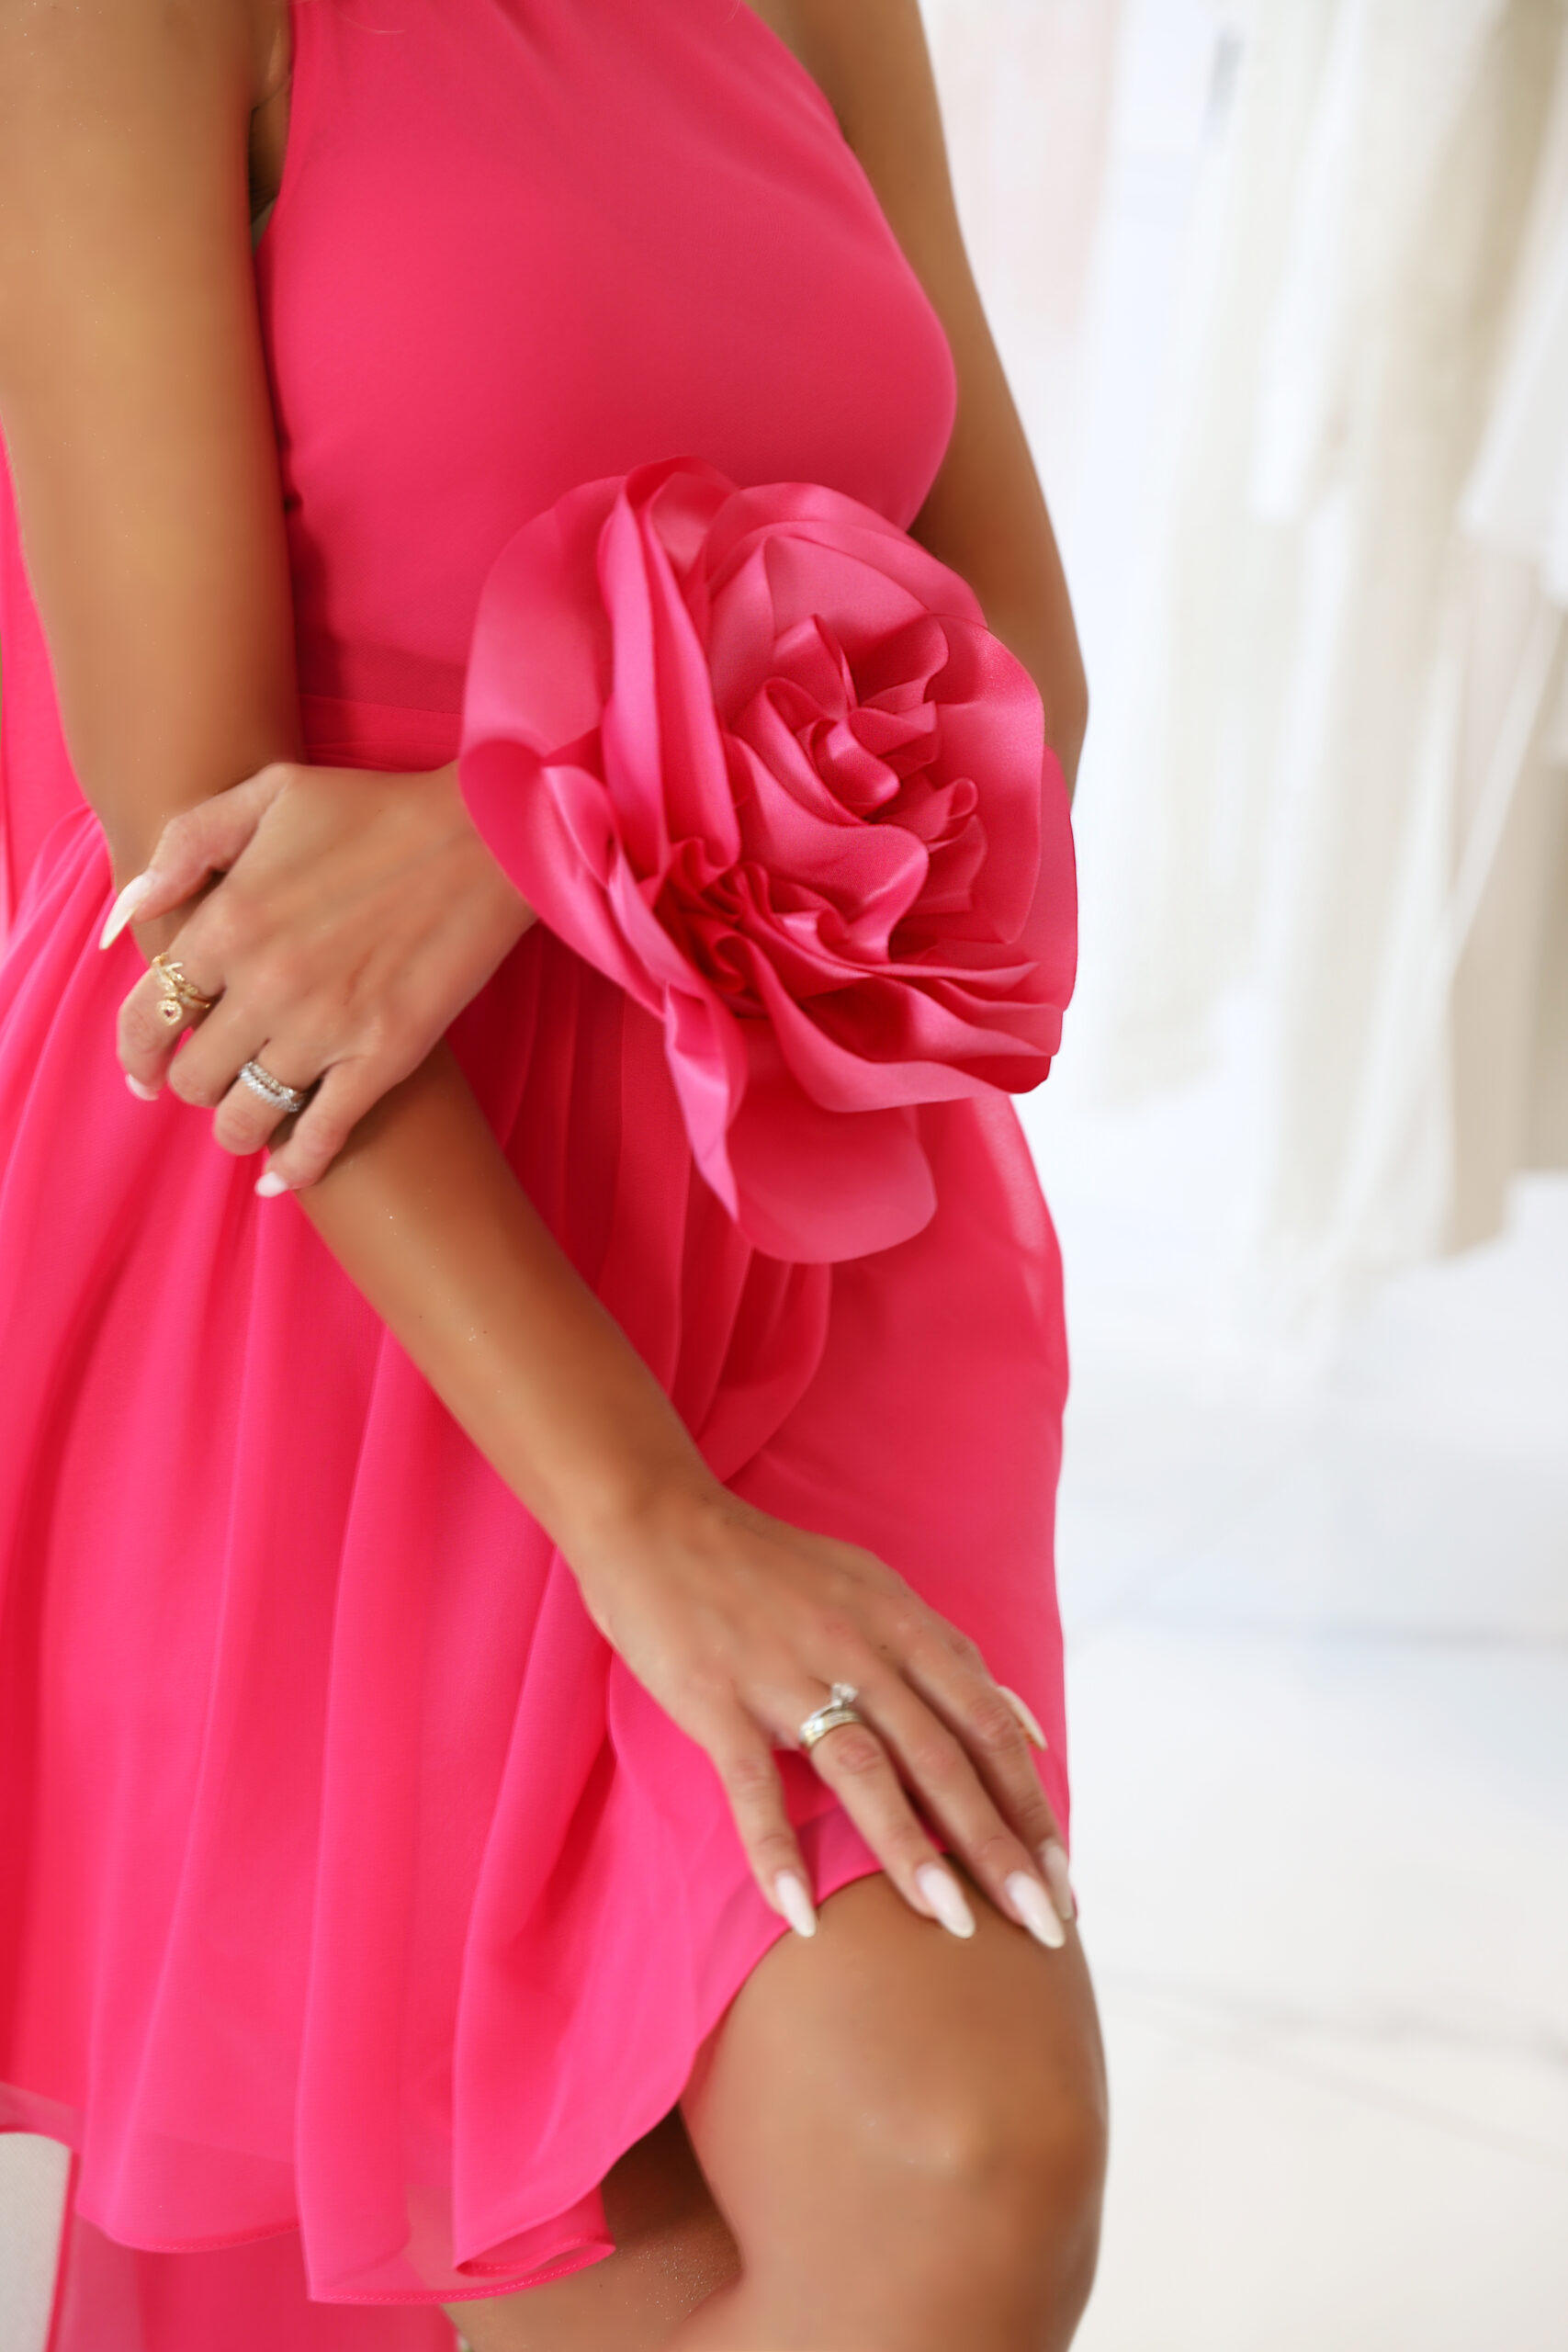 розова рокля, бонбонено розова рокля, рокля розова, рокля с роза, рокля с текстилна роза, рокля с цикламена роза, цикламена рокля, рокля барби, рокля като барби